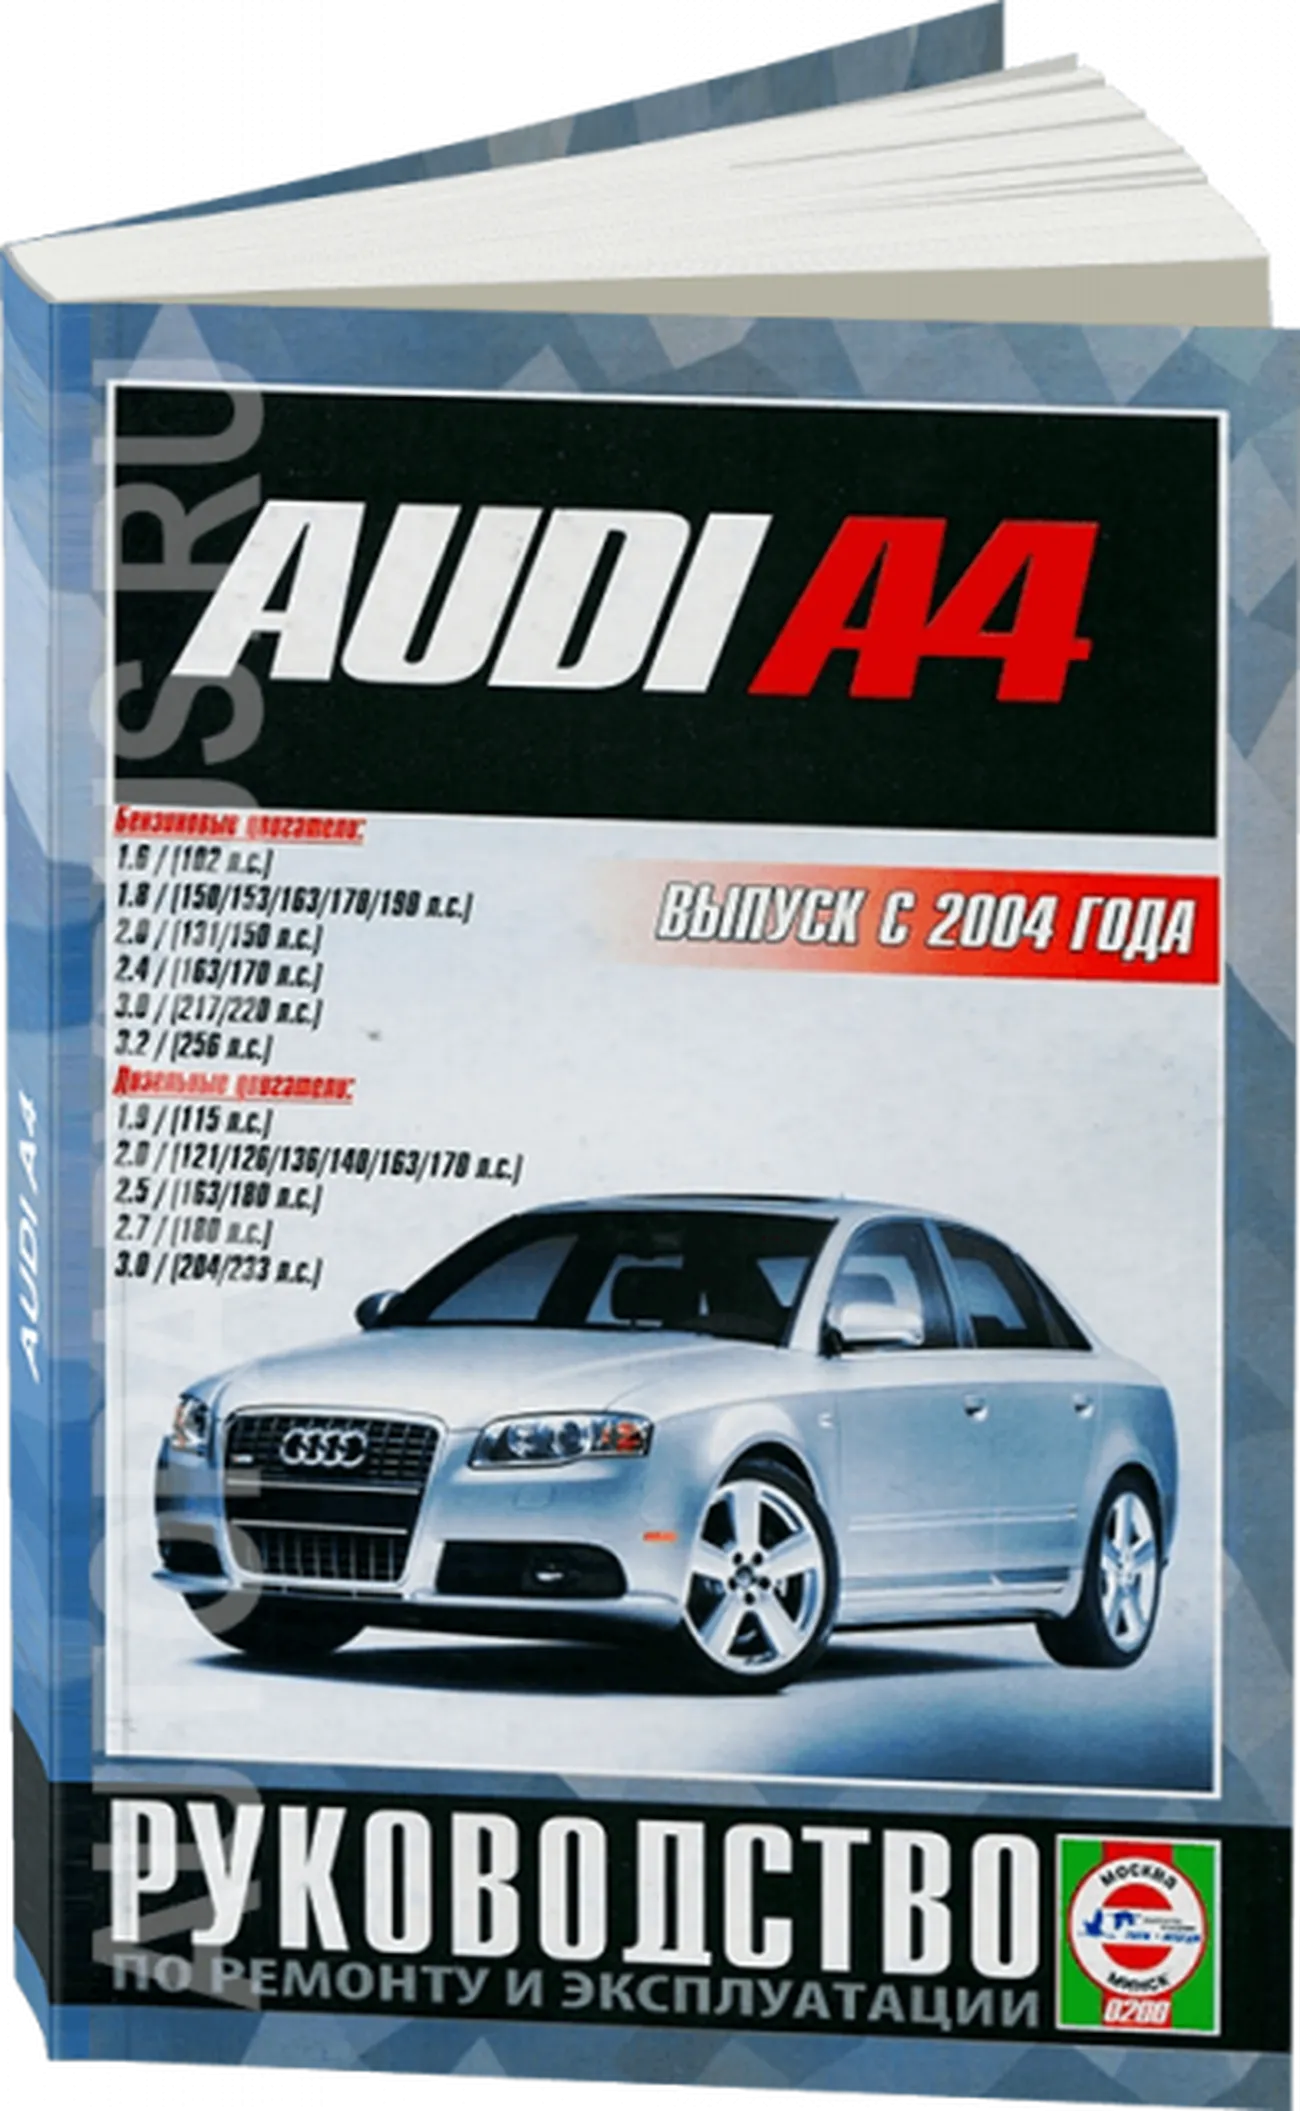 Книга: AUDI A4 (б , д) с 2004 г.в., рем., экспл., то | Чижовка